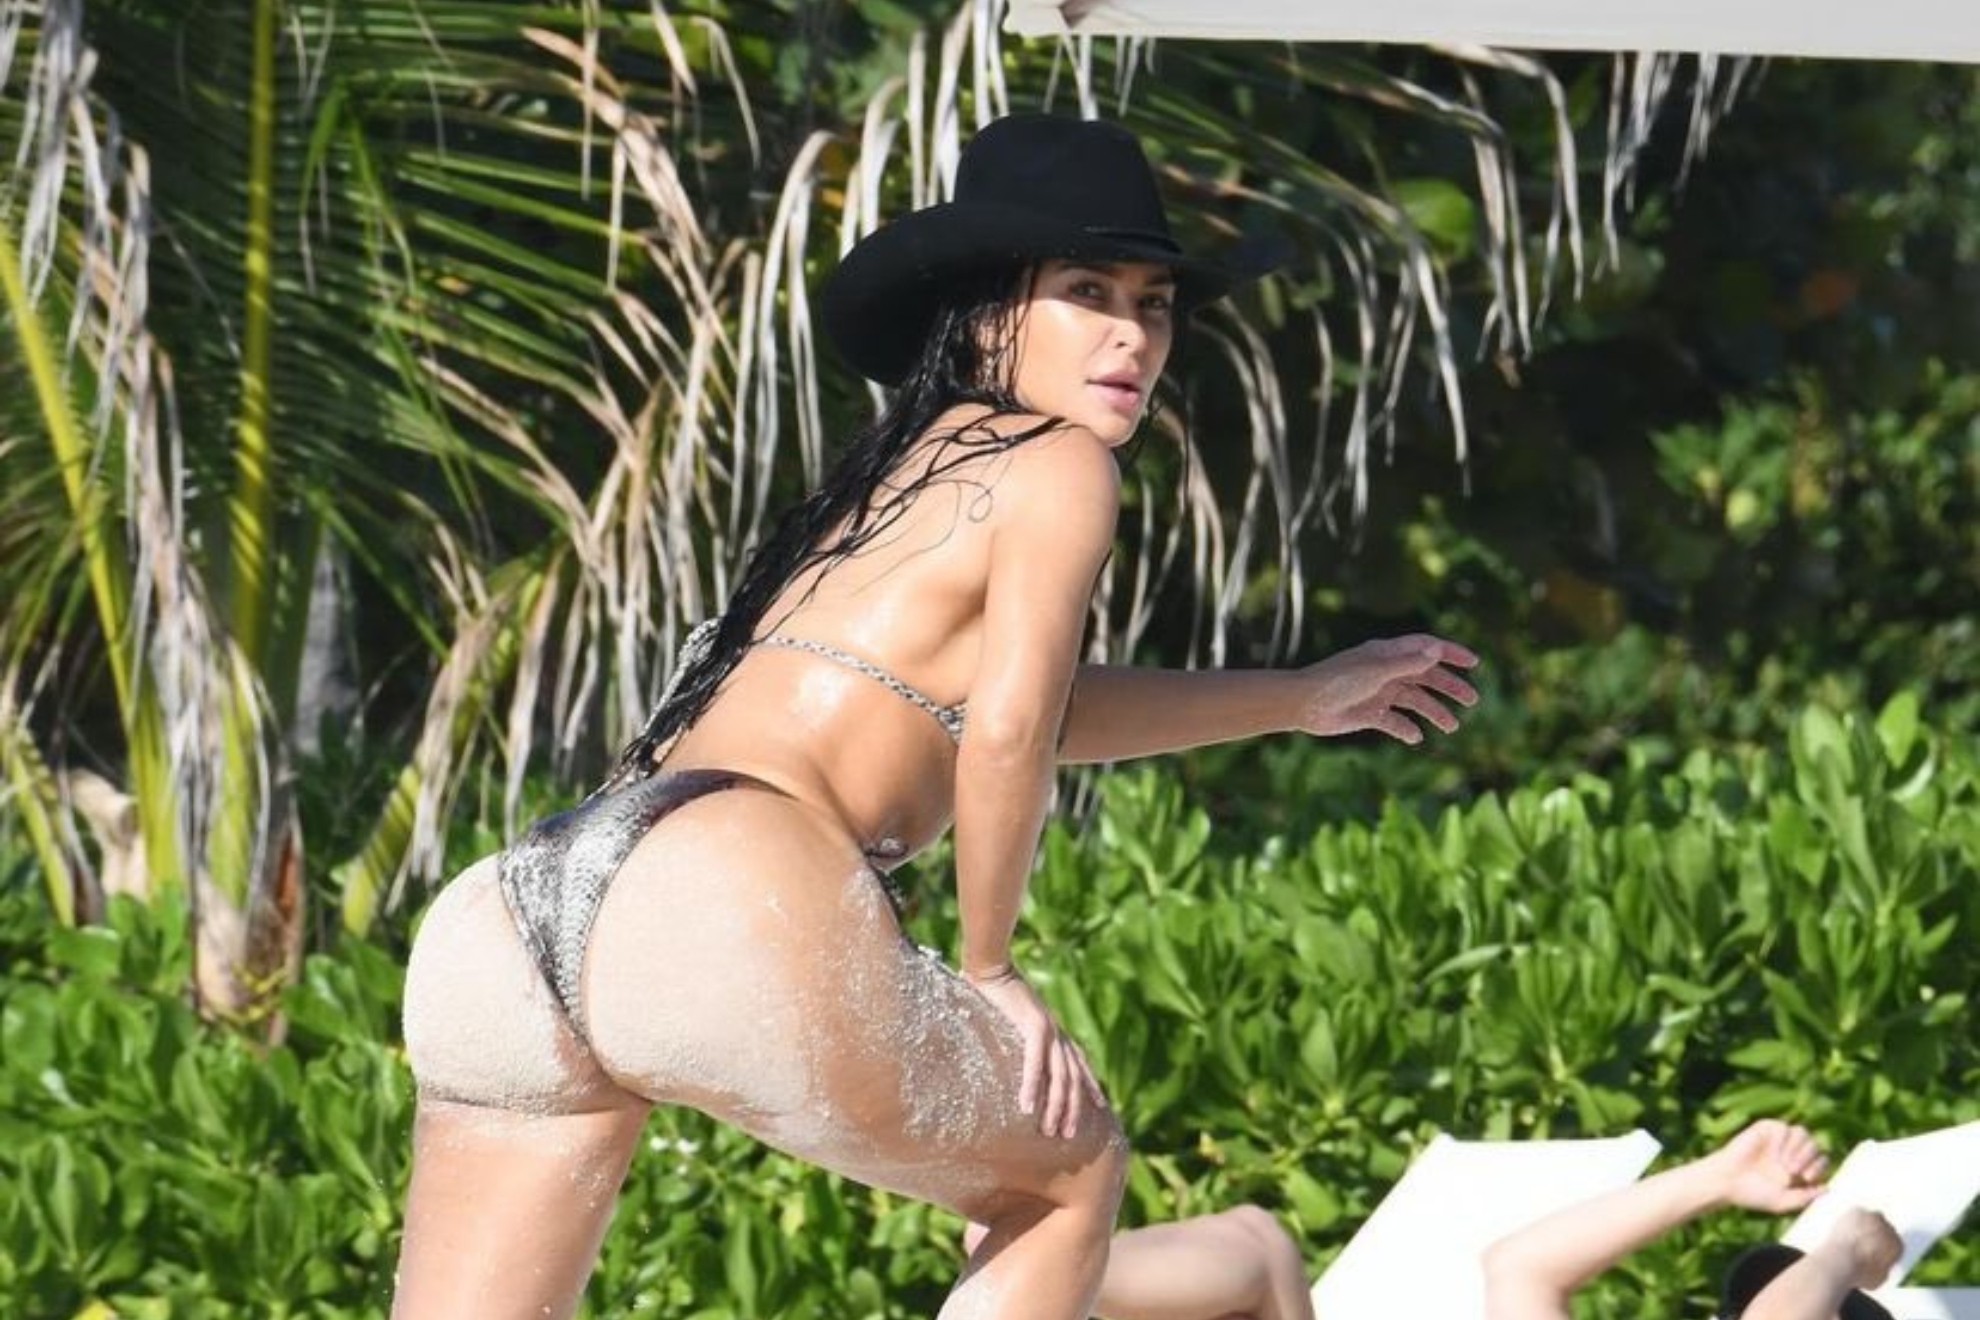 Kim, Kloh Kardashian invite fans to take a peek at their sensual vacation photos in Turks and Caicos